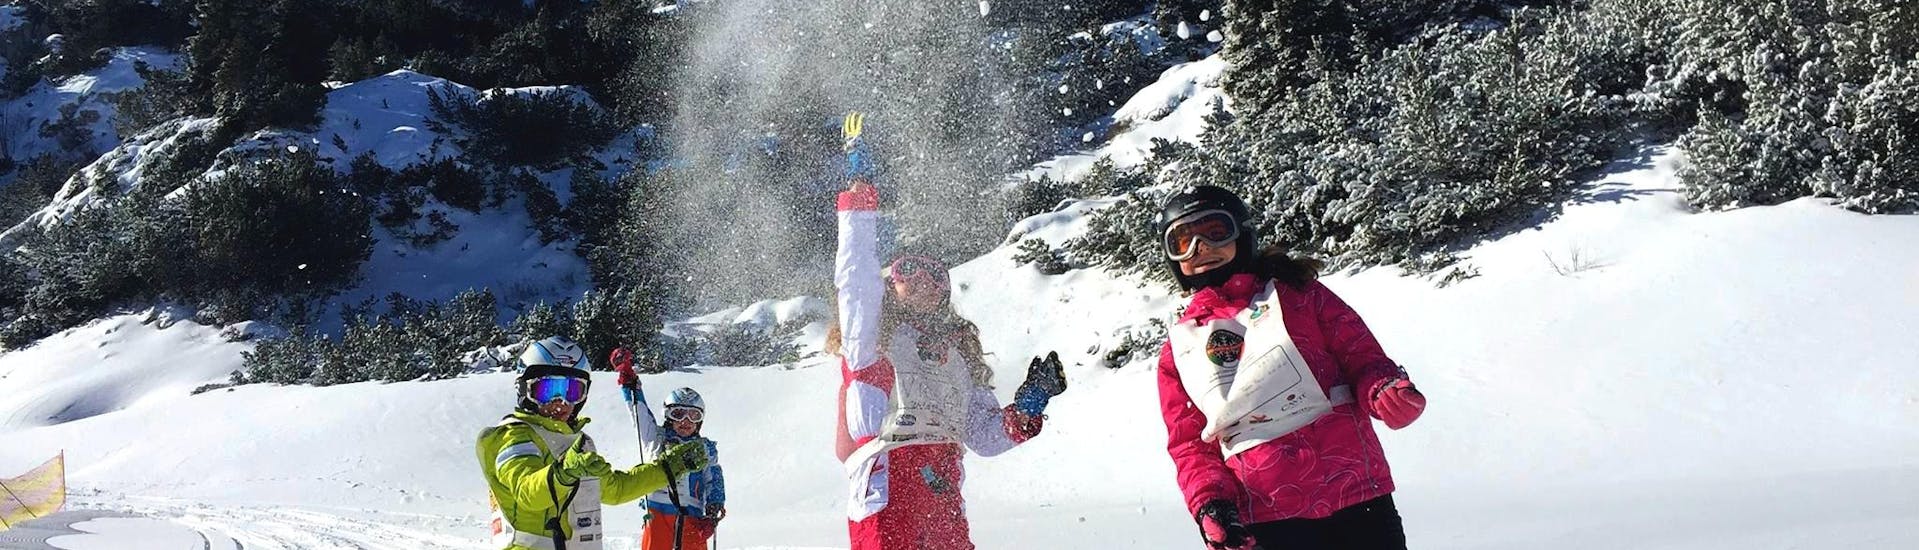 Kids Ski Lessons (6-14 y.) for All Levels - Weekend with Scuola di Sci Andalo Dolomiti di Brenta - Hero image